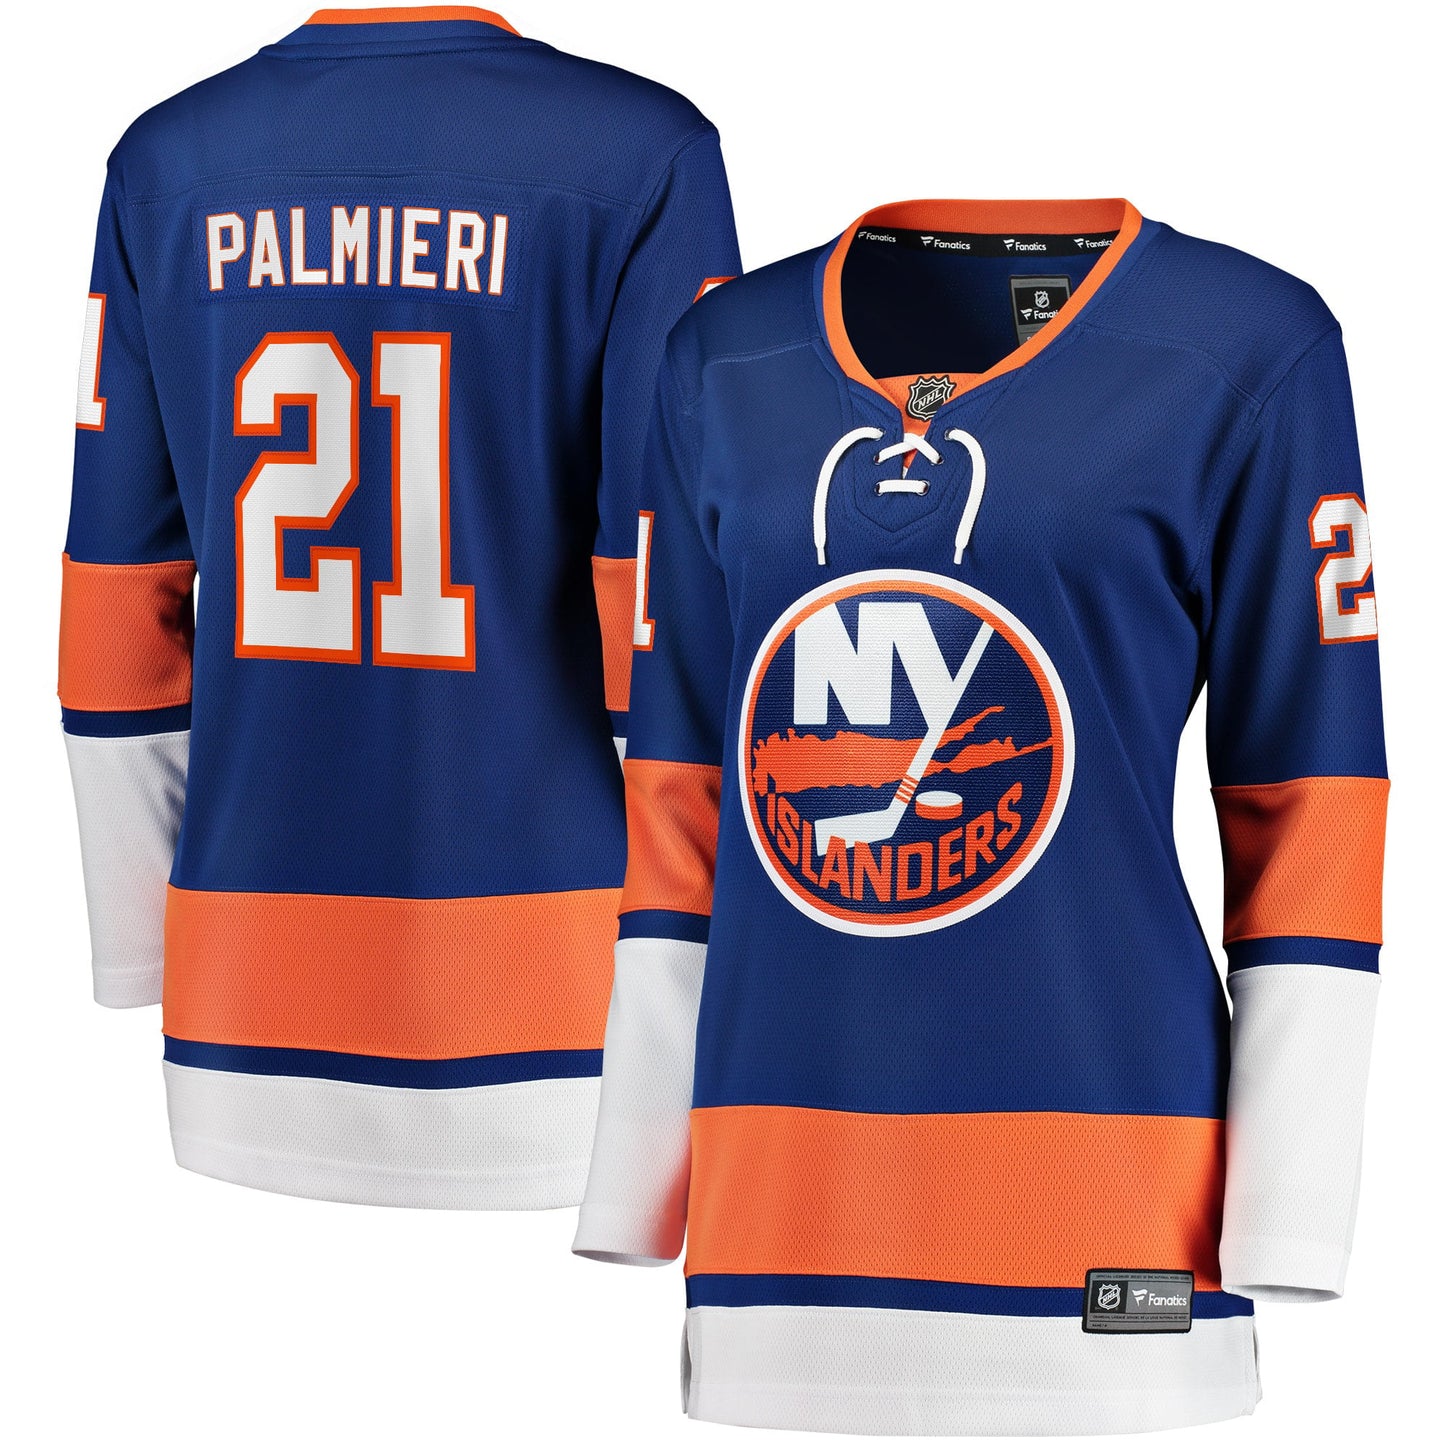 Women's Fanatics Branded Kyle Palmieri Royal New York Islanders Home Breakaway Replica Jersey